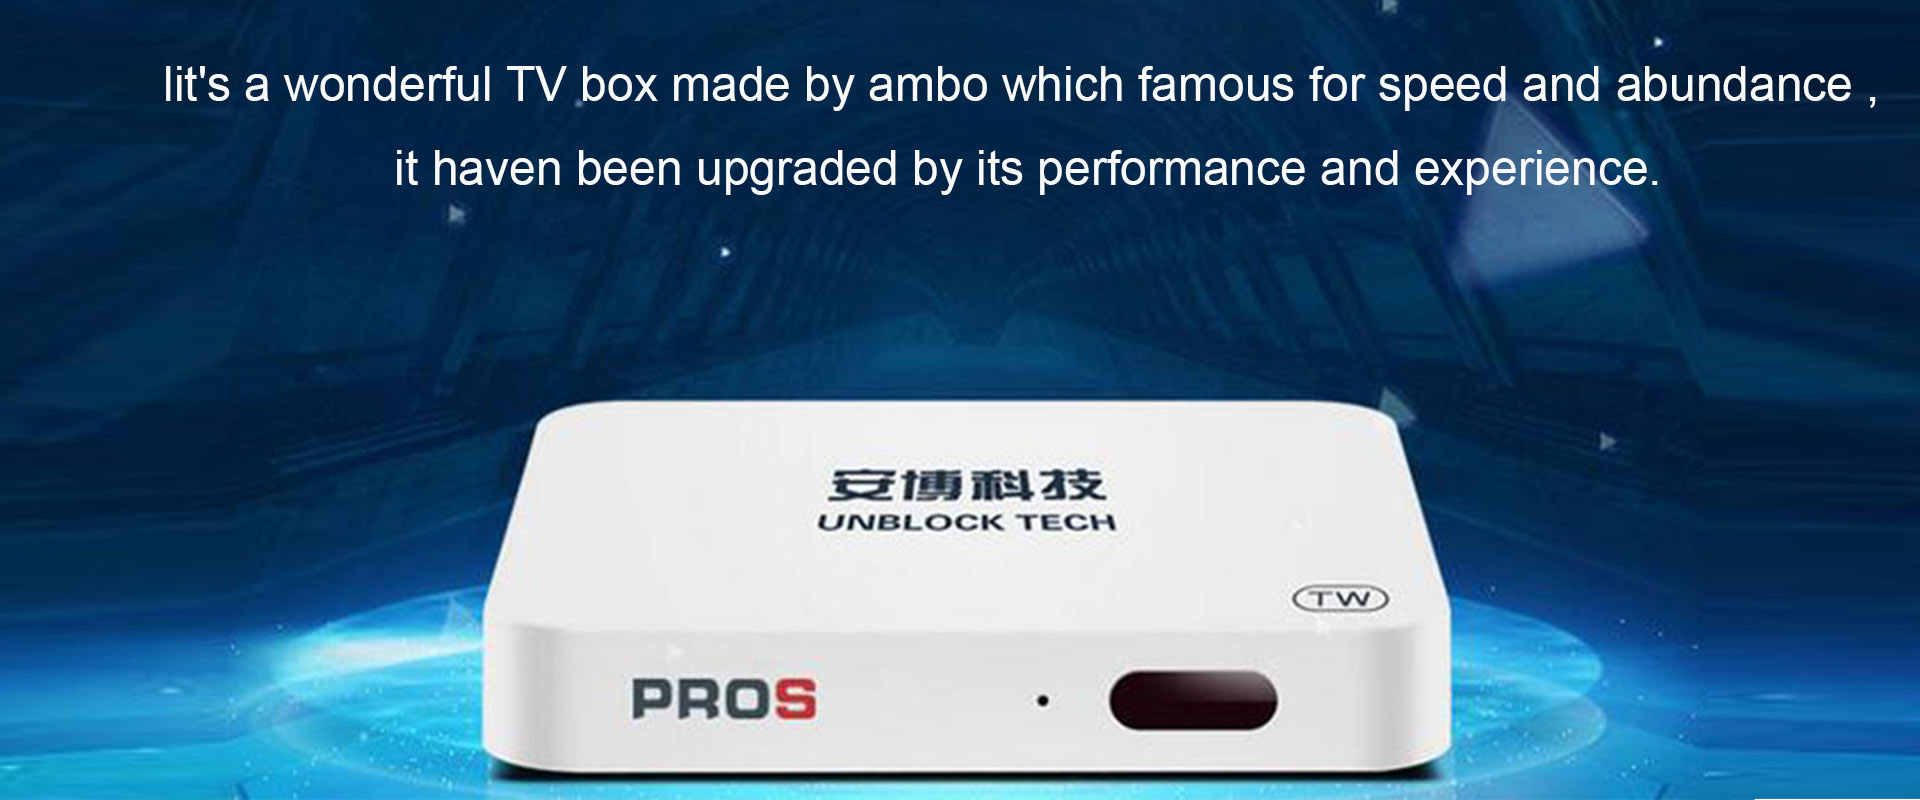 UBOX 7 TV Box - разблокировать UPROS UBOX Gen 7 Android TV Box 4K